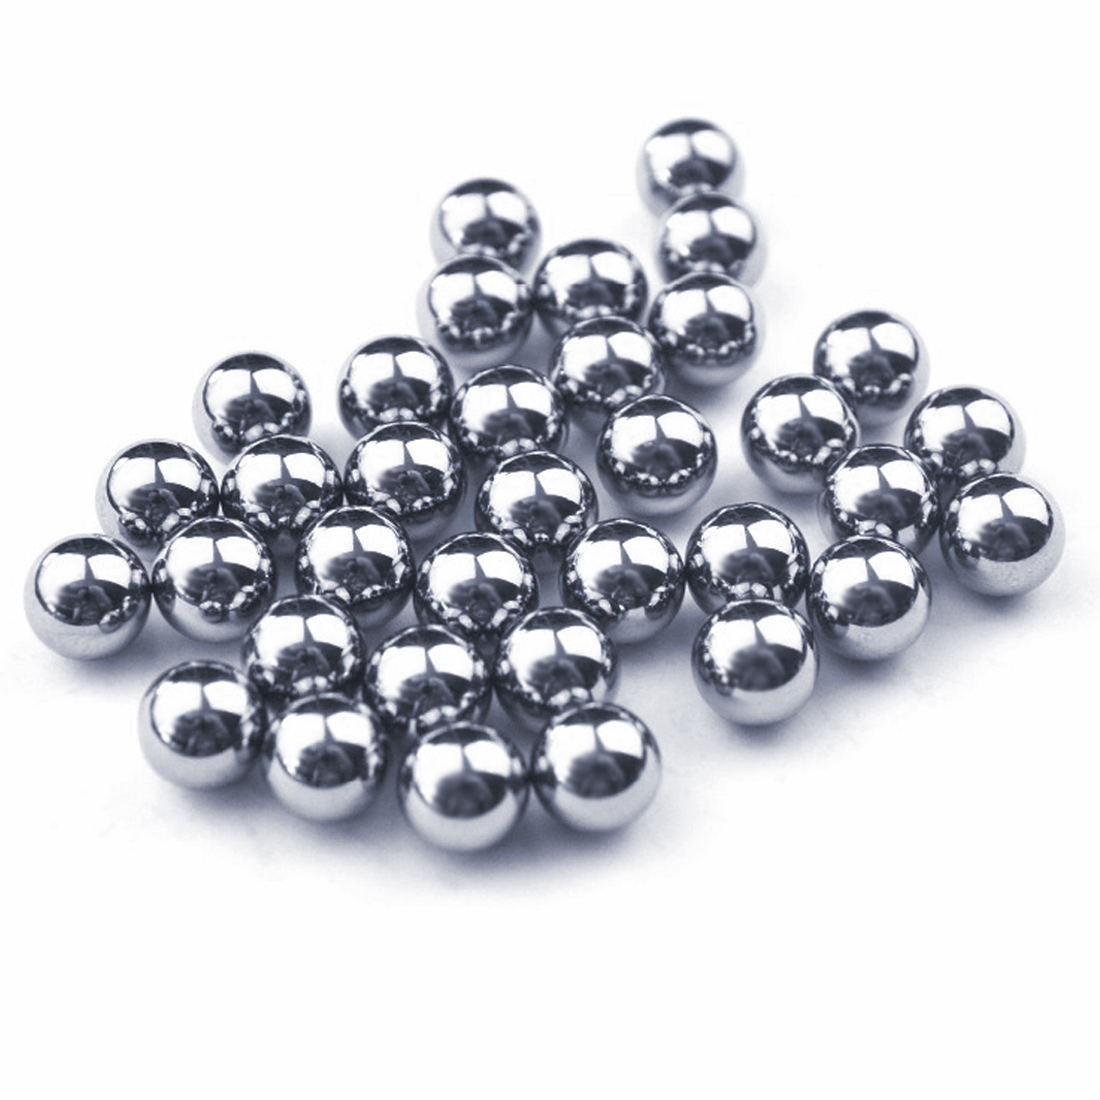  - Bulk Steel Balls